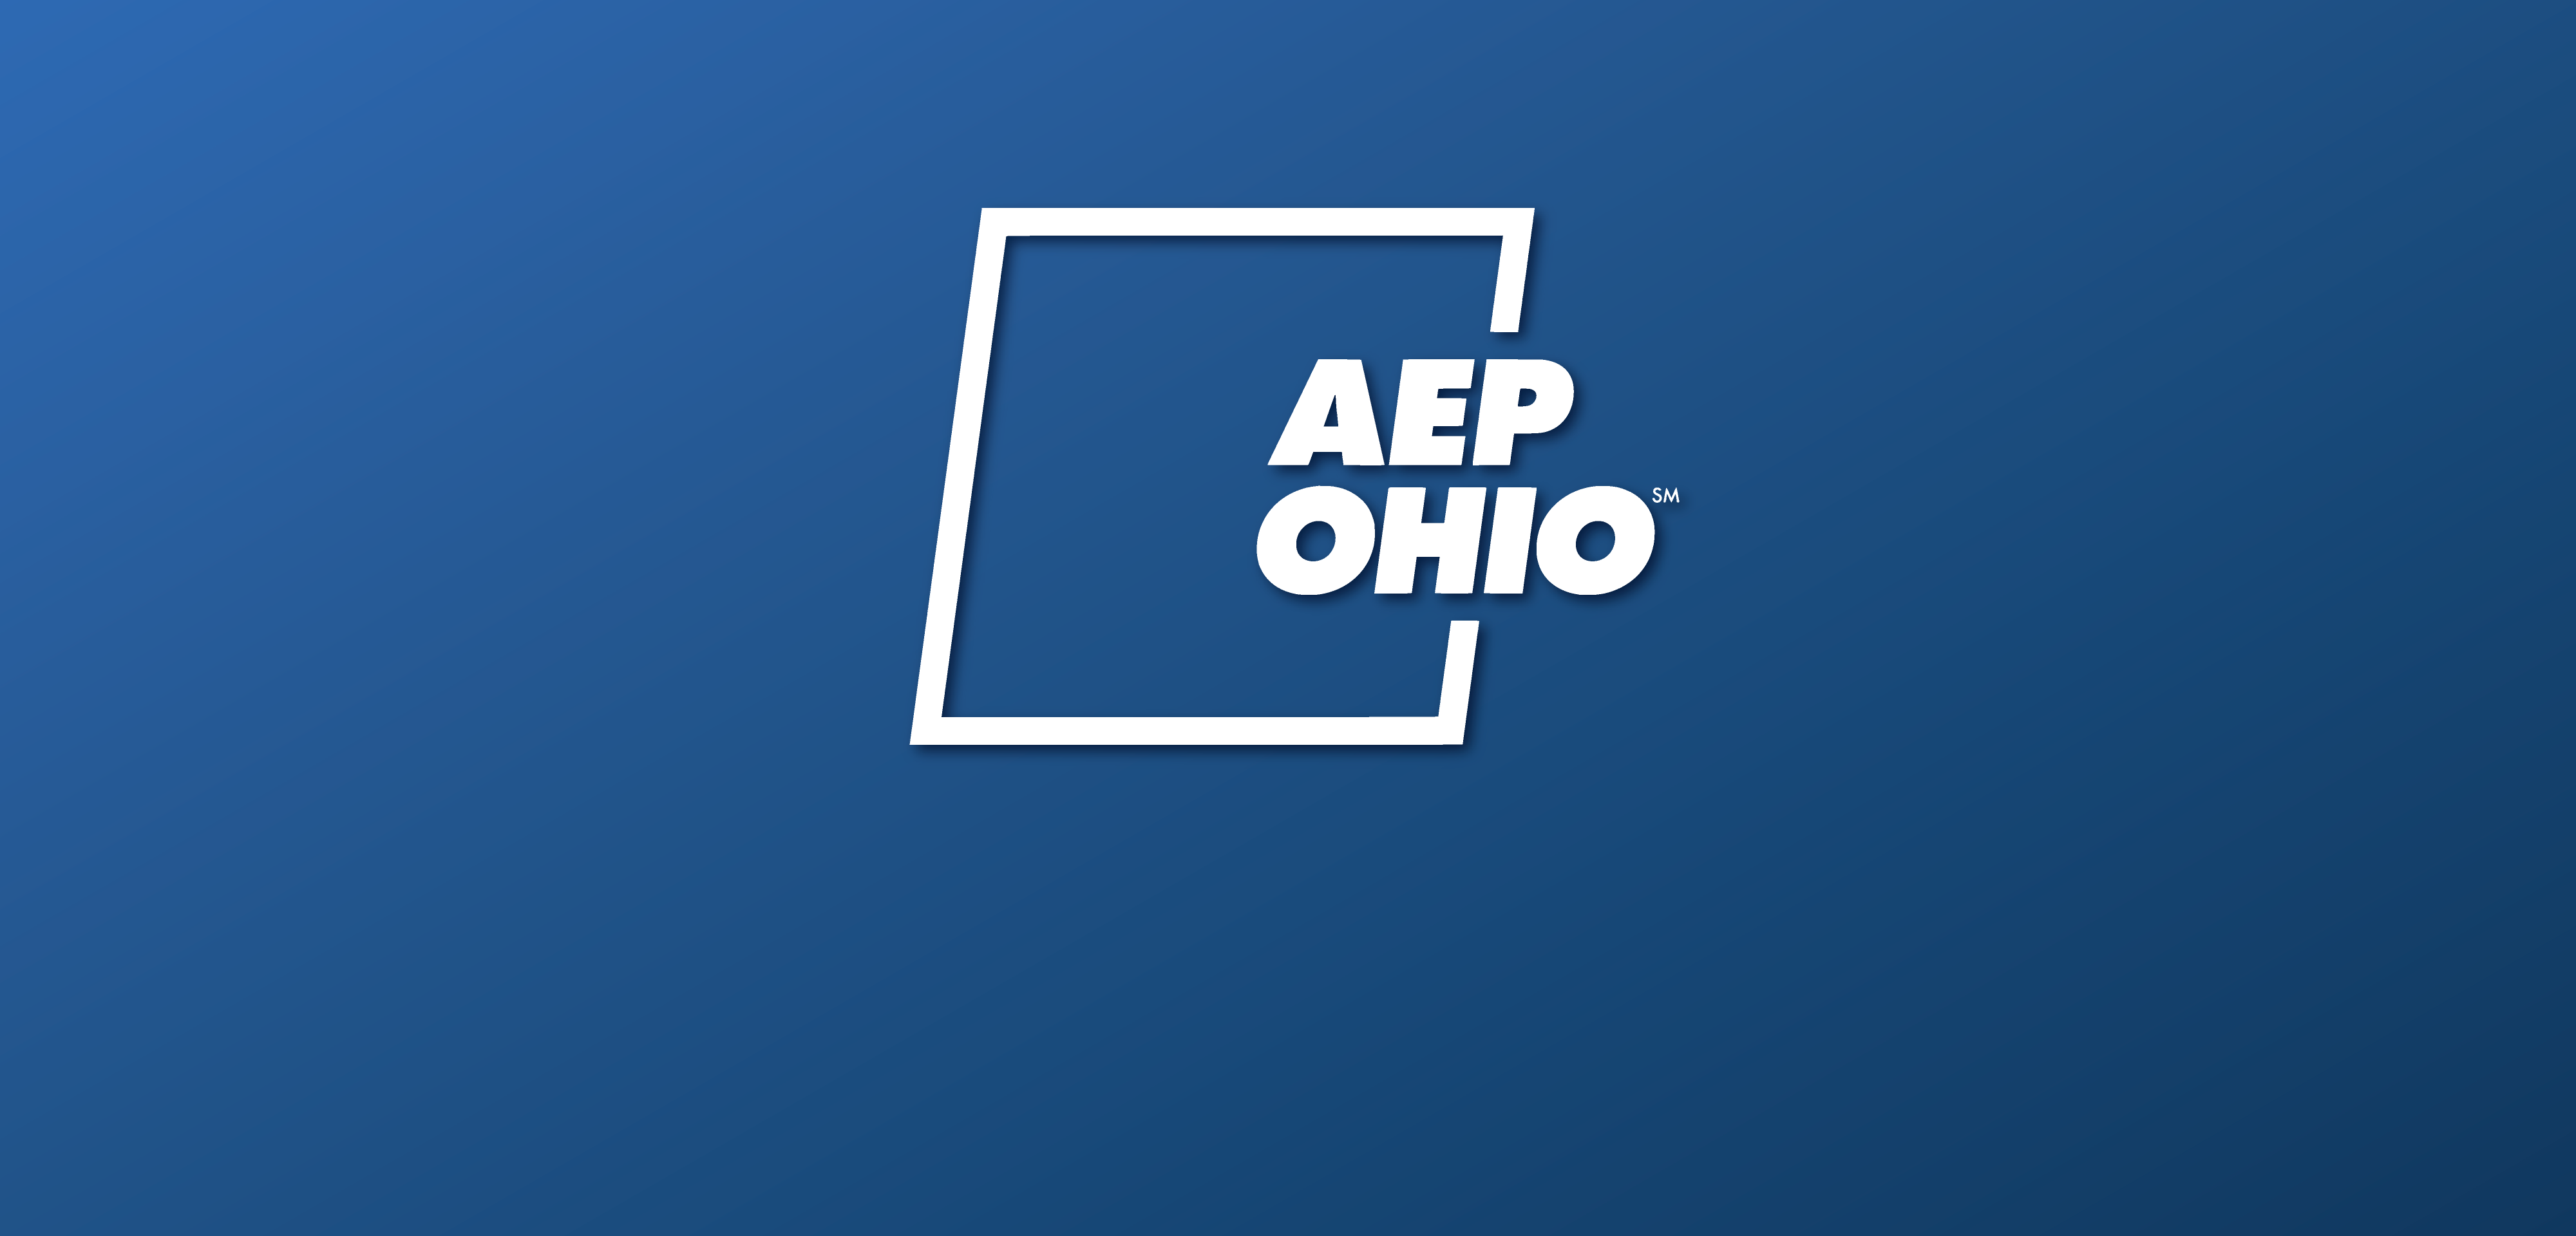 Going solar with American Electric Power Ohio (AEP Ohio)